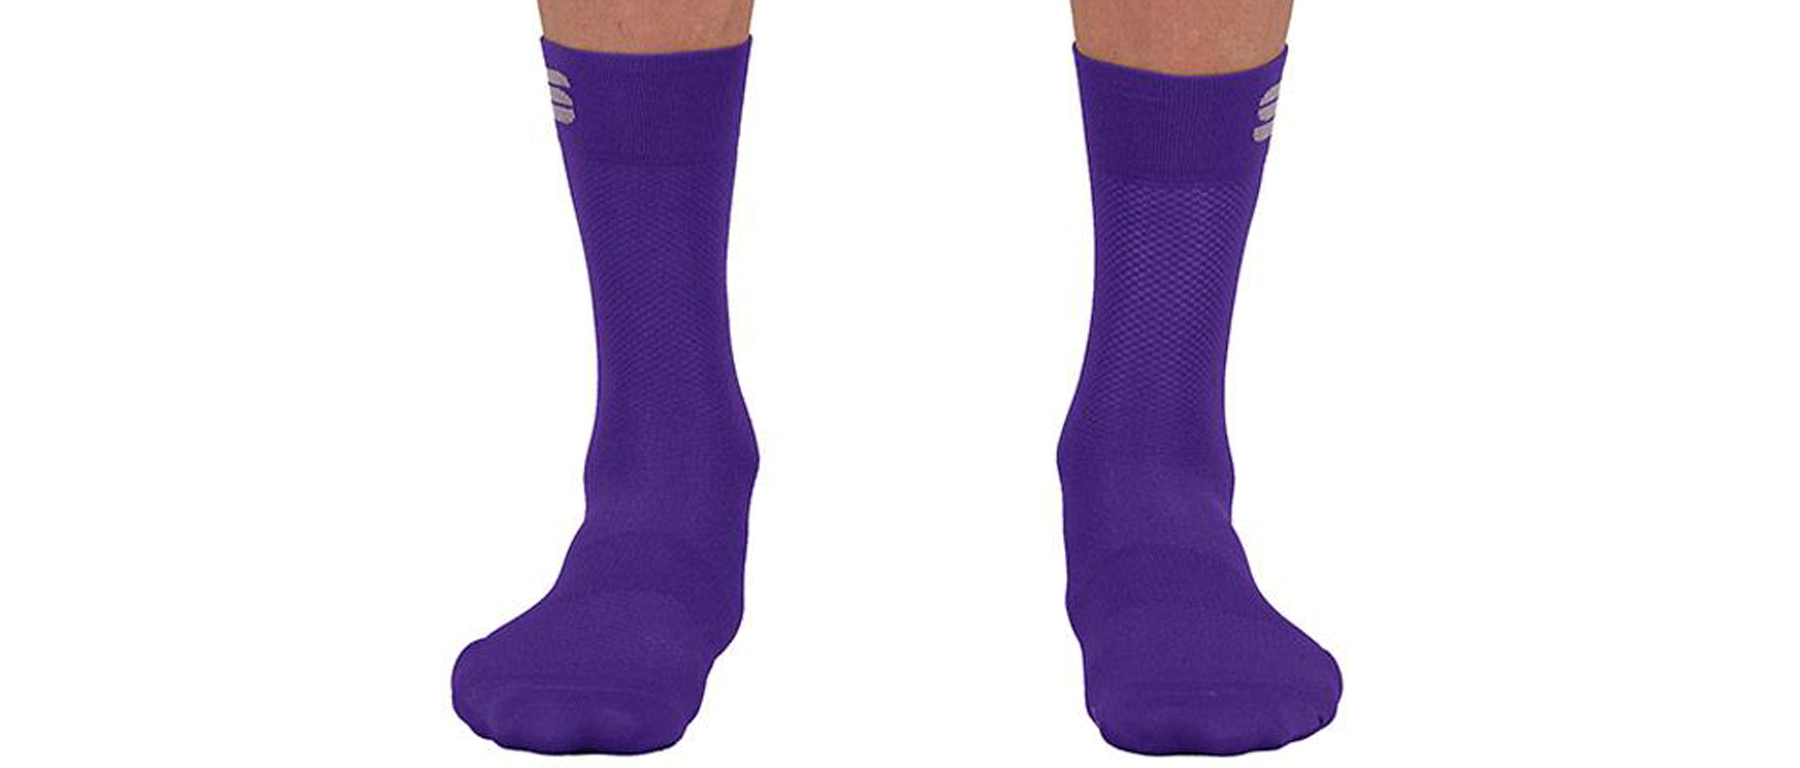 Sportful Matchy W Socks SAMPLE